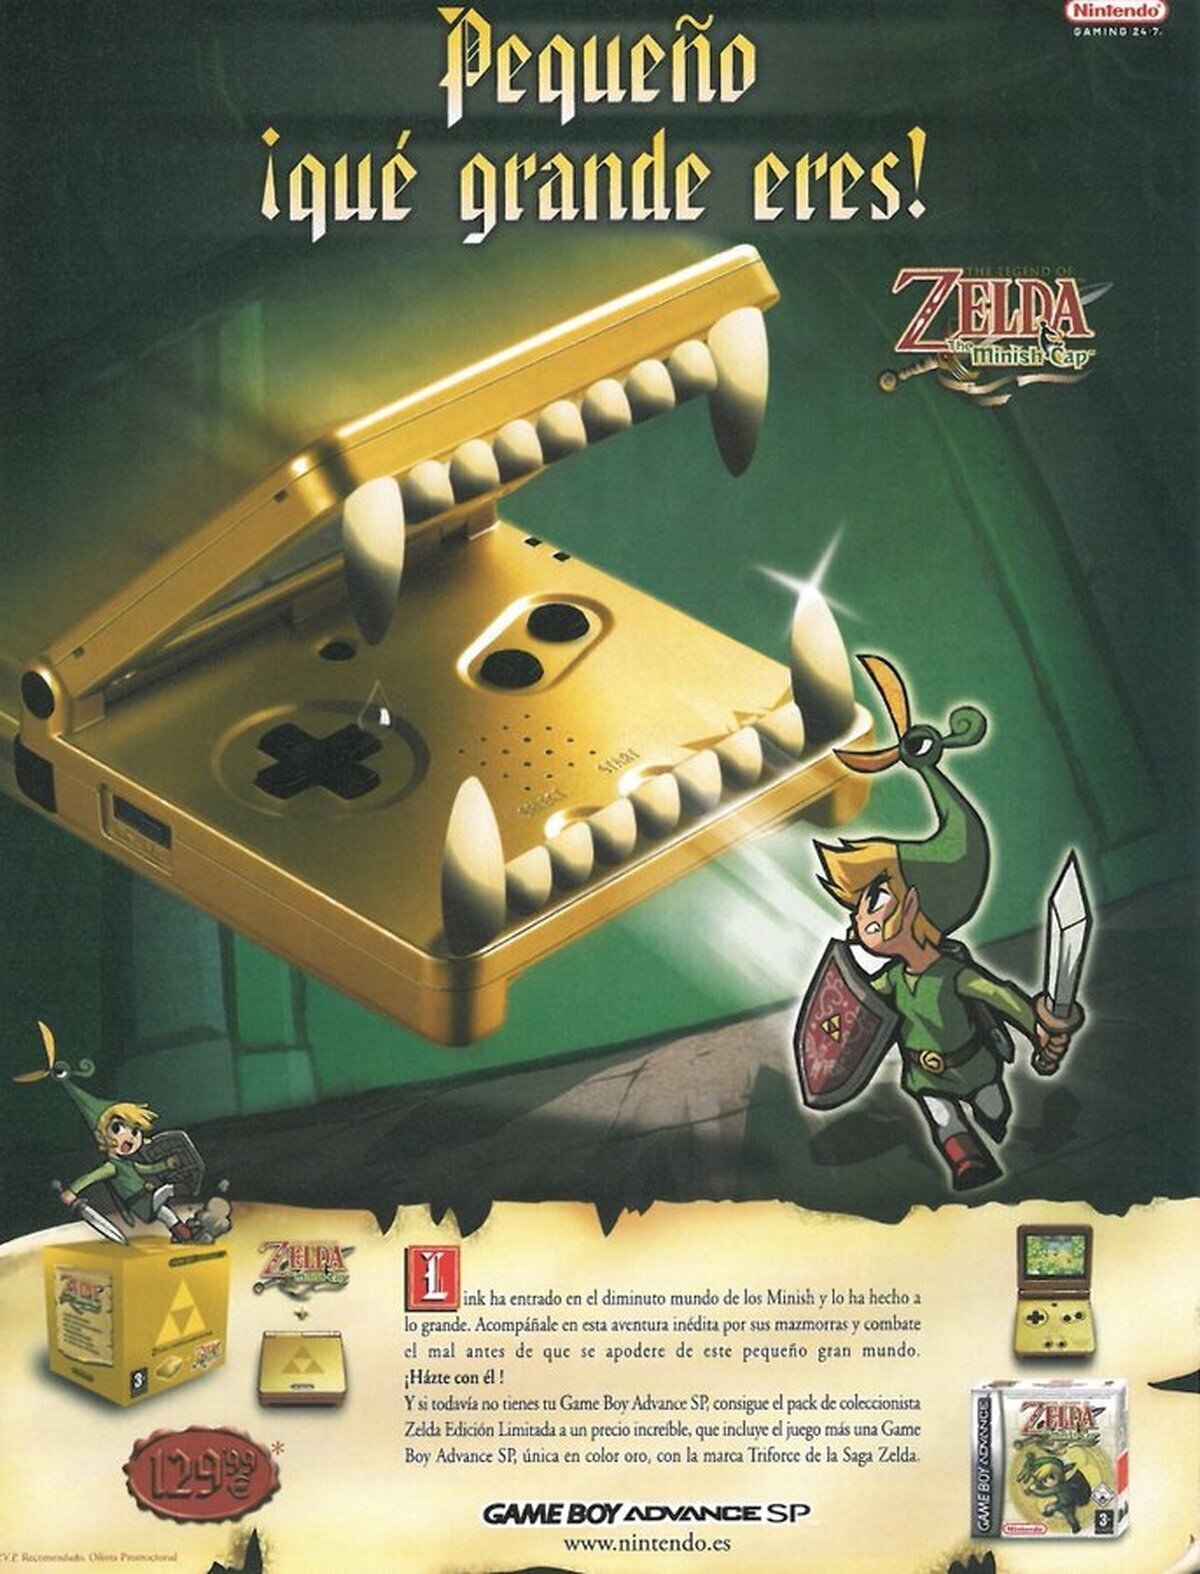 Publicidad en prensa de The Legend of Zelda: The Minish Cap (Game Boy Advance, 2004).

¡Con consola especial dorada!